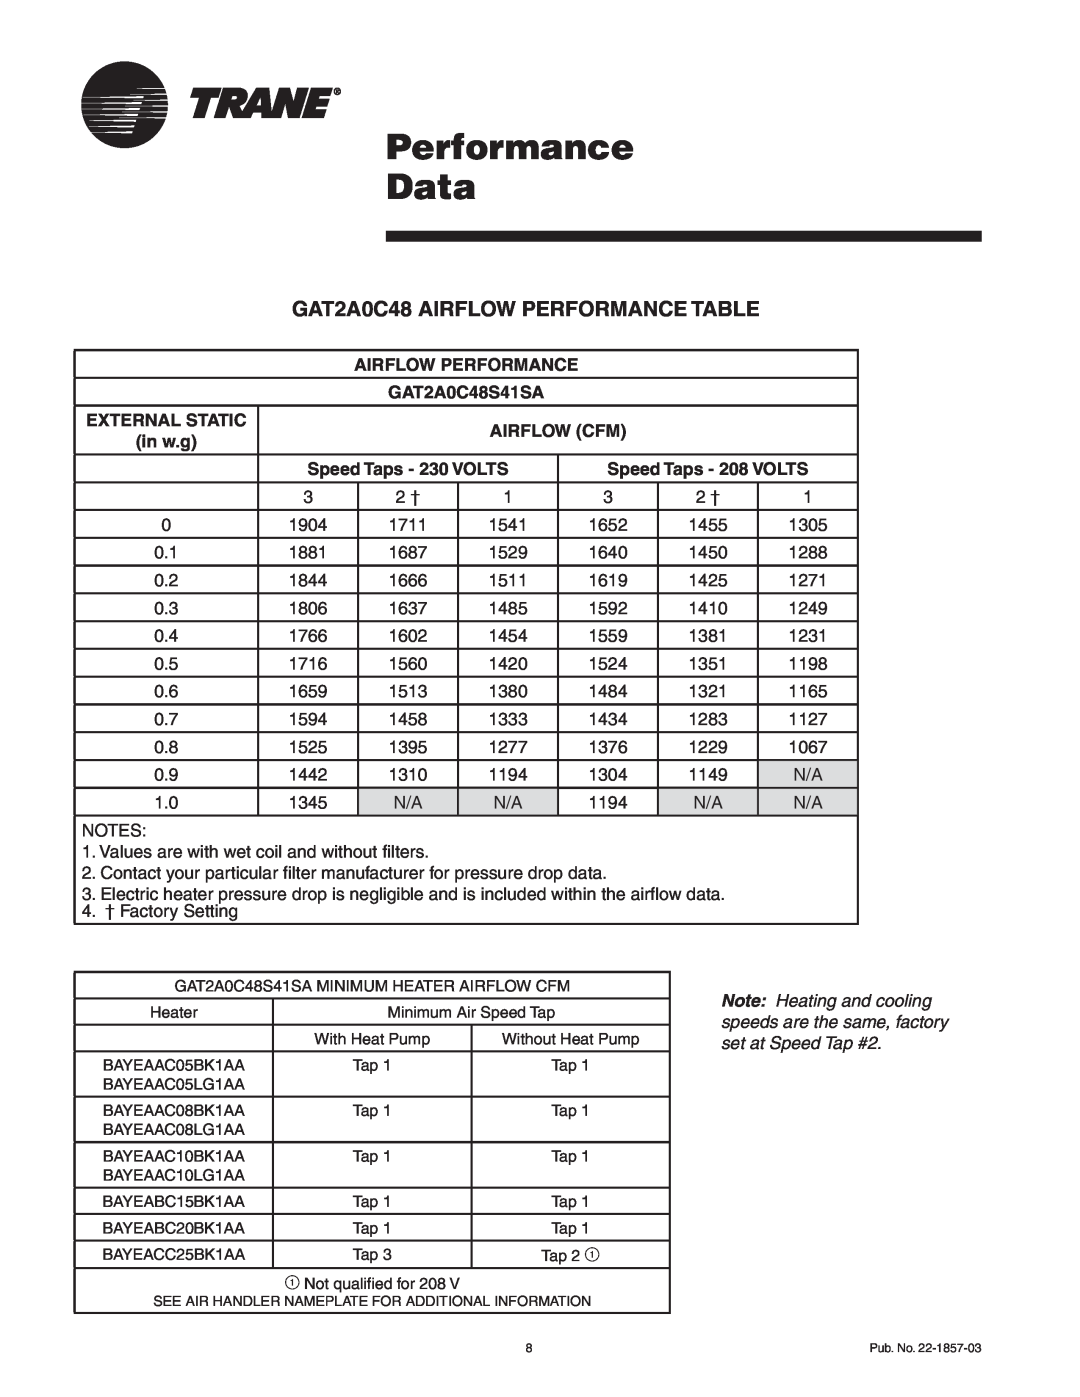 Trane GAT2A0C60S51SA, GAT2A0C48S41SA manual Performance Data, GAT2A0C48 AIRFLOW PERFORMANCE TABLE 